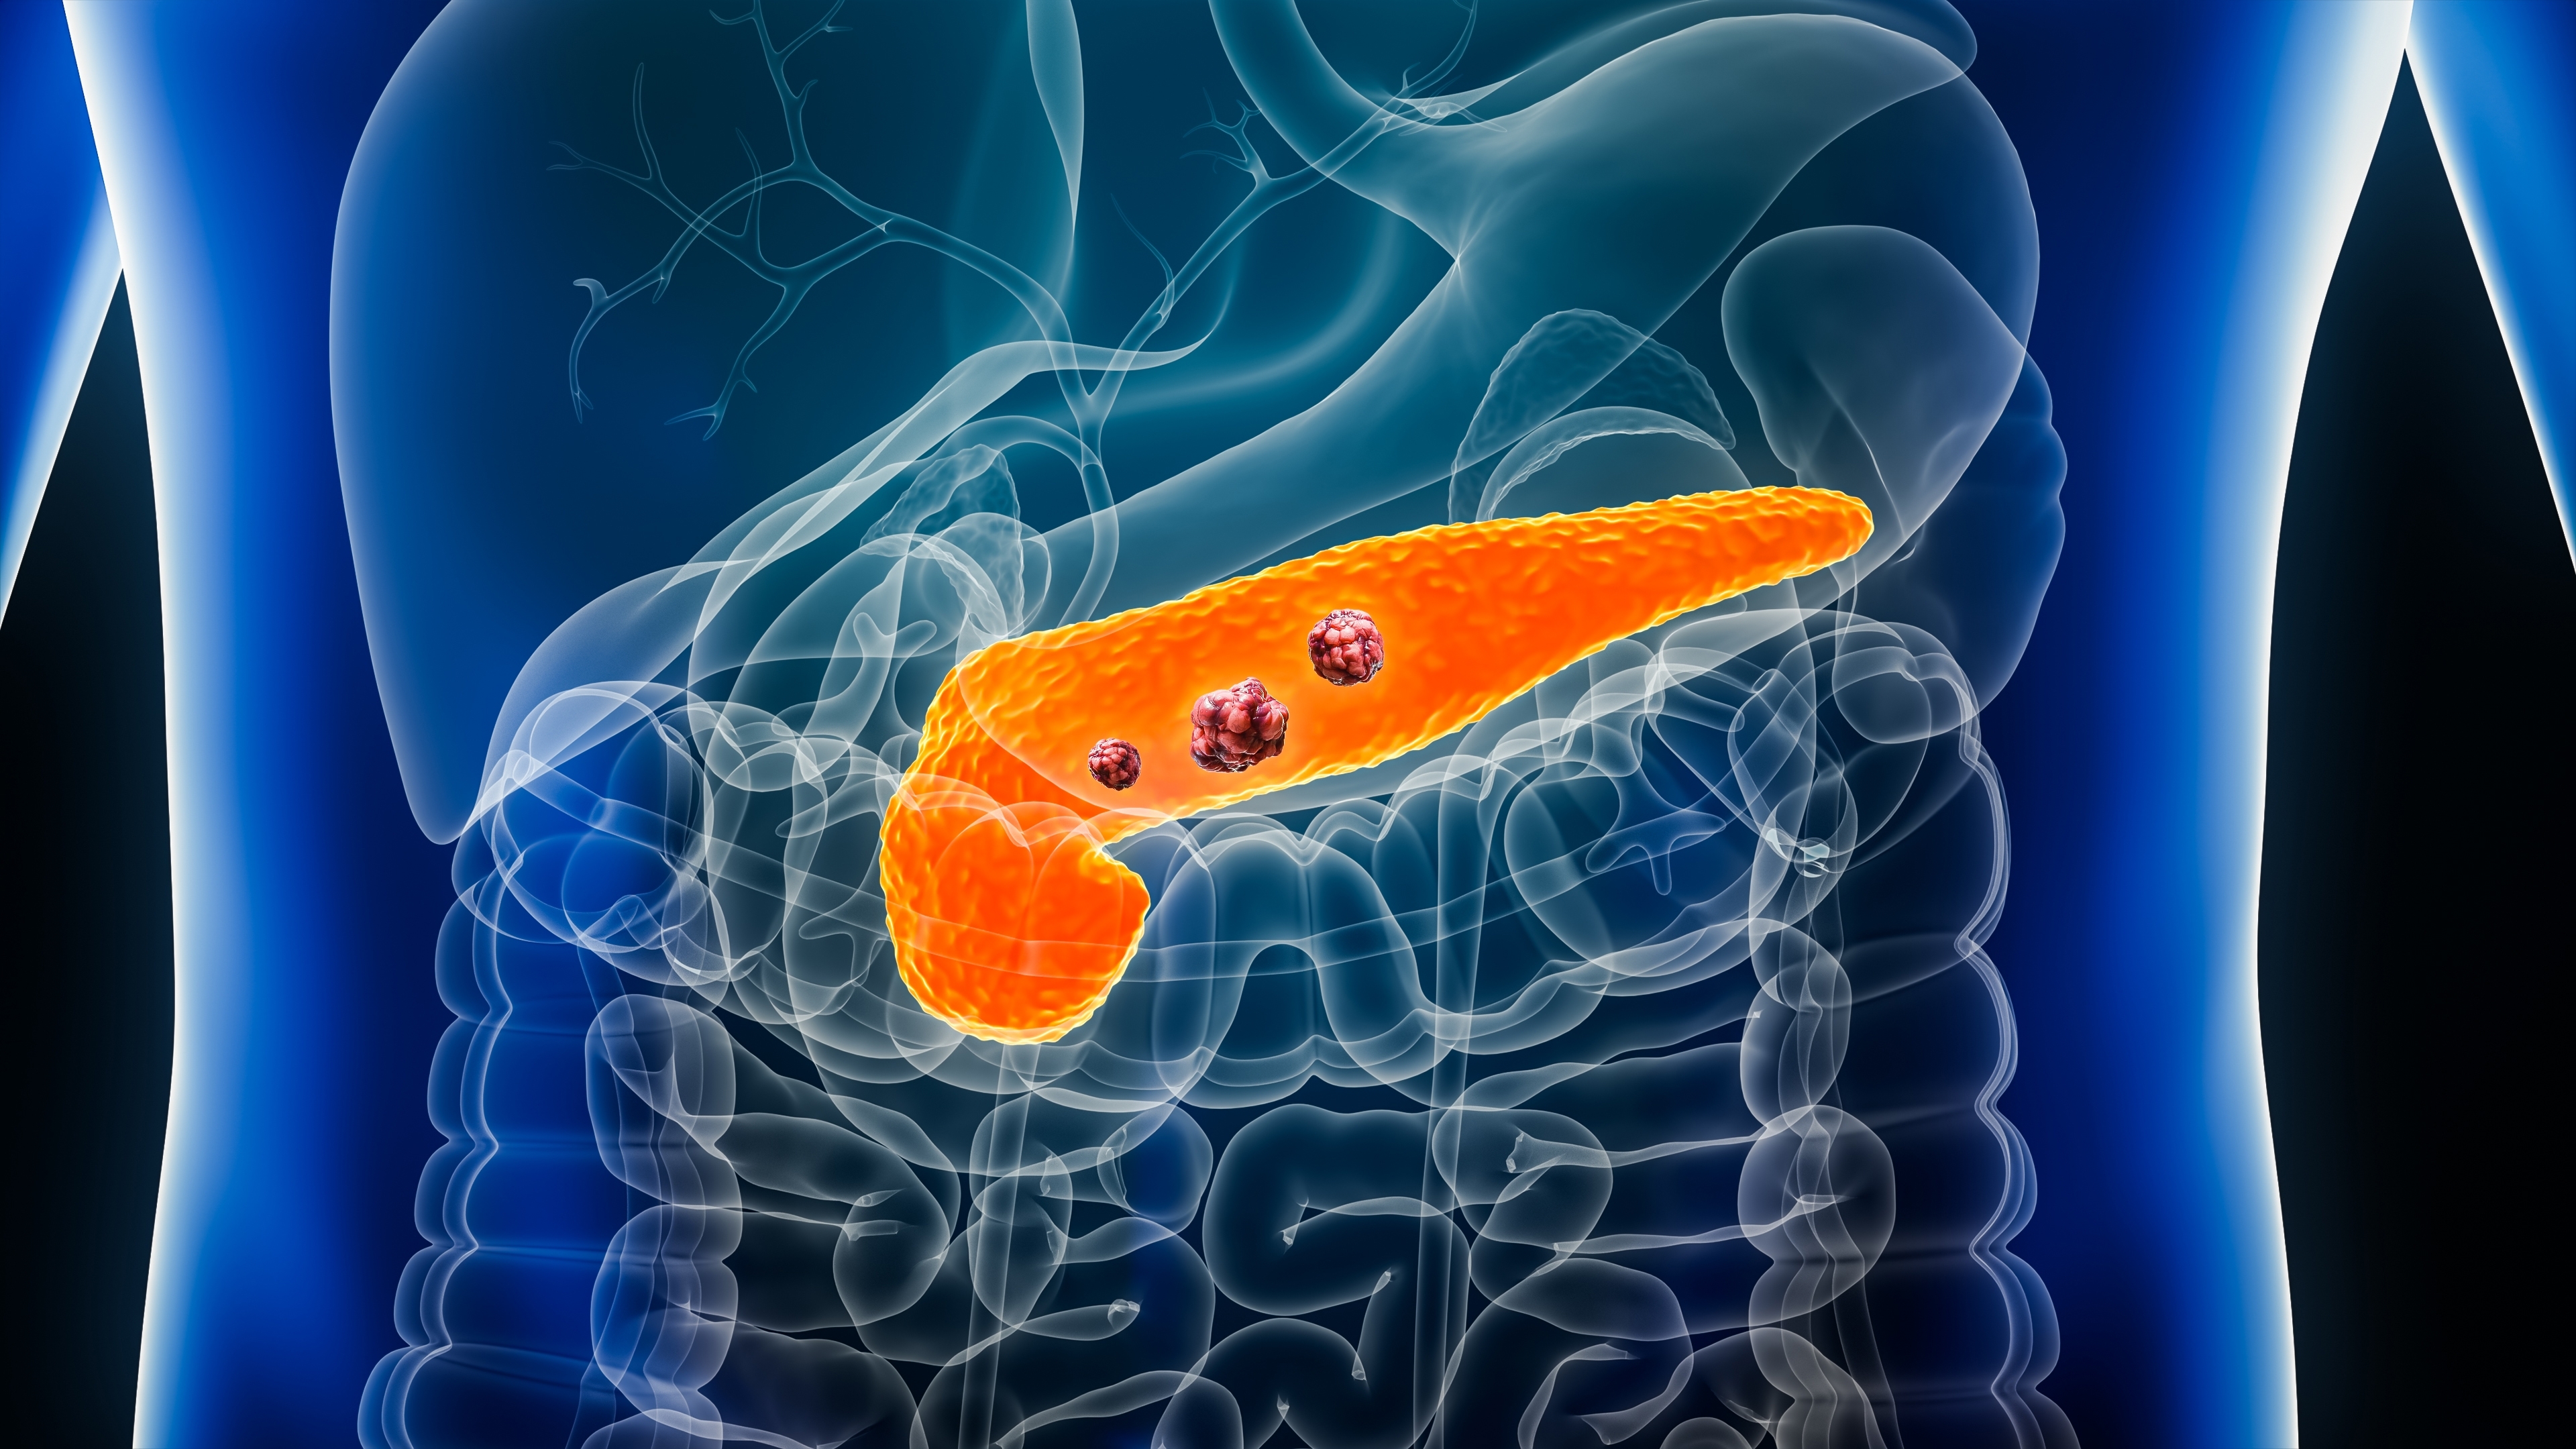 Illustration of pancreas with tumors.